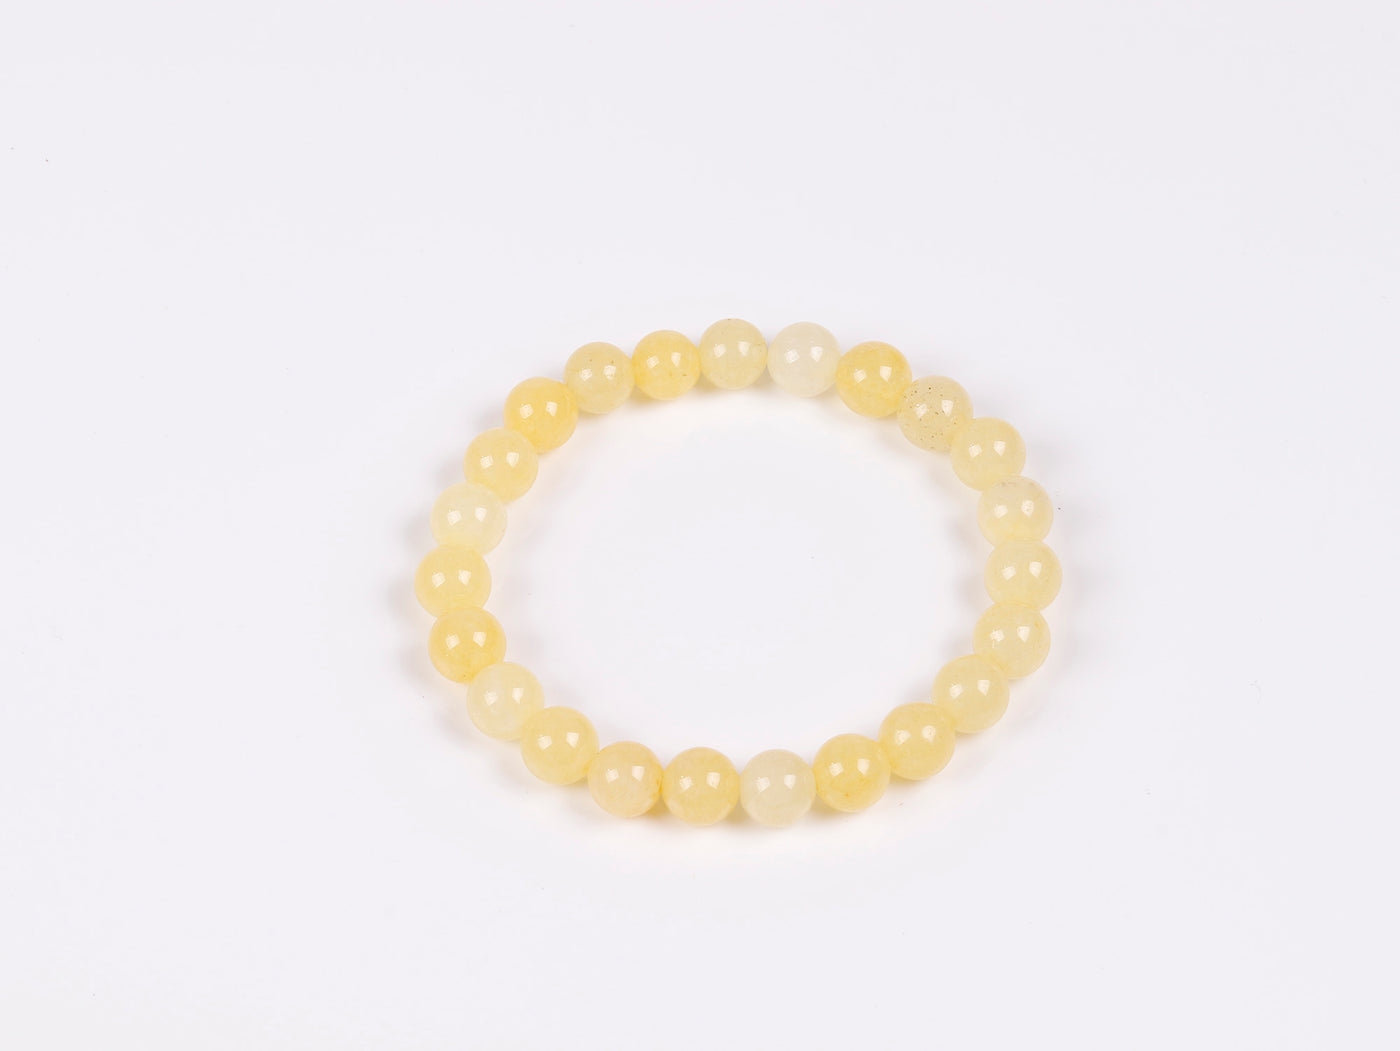 Revitalizing Sunbeam Yellow Jade Bracelet